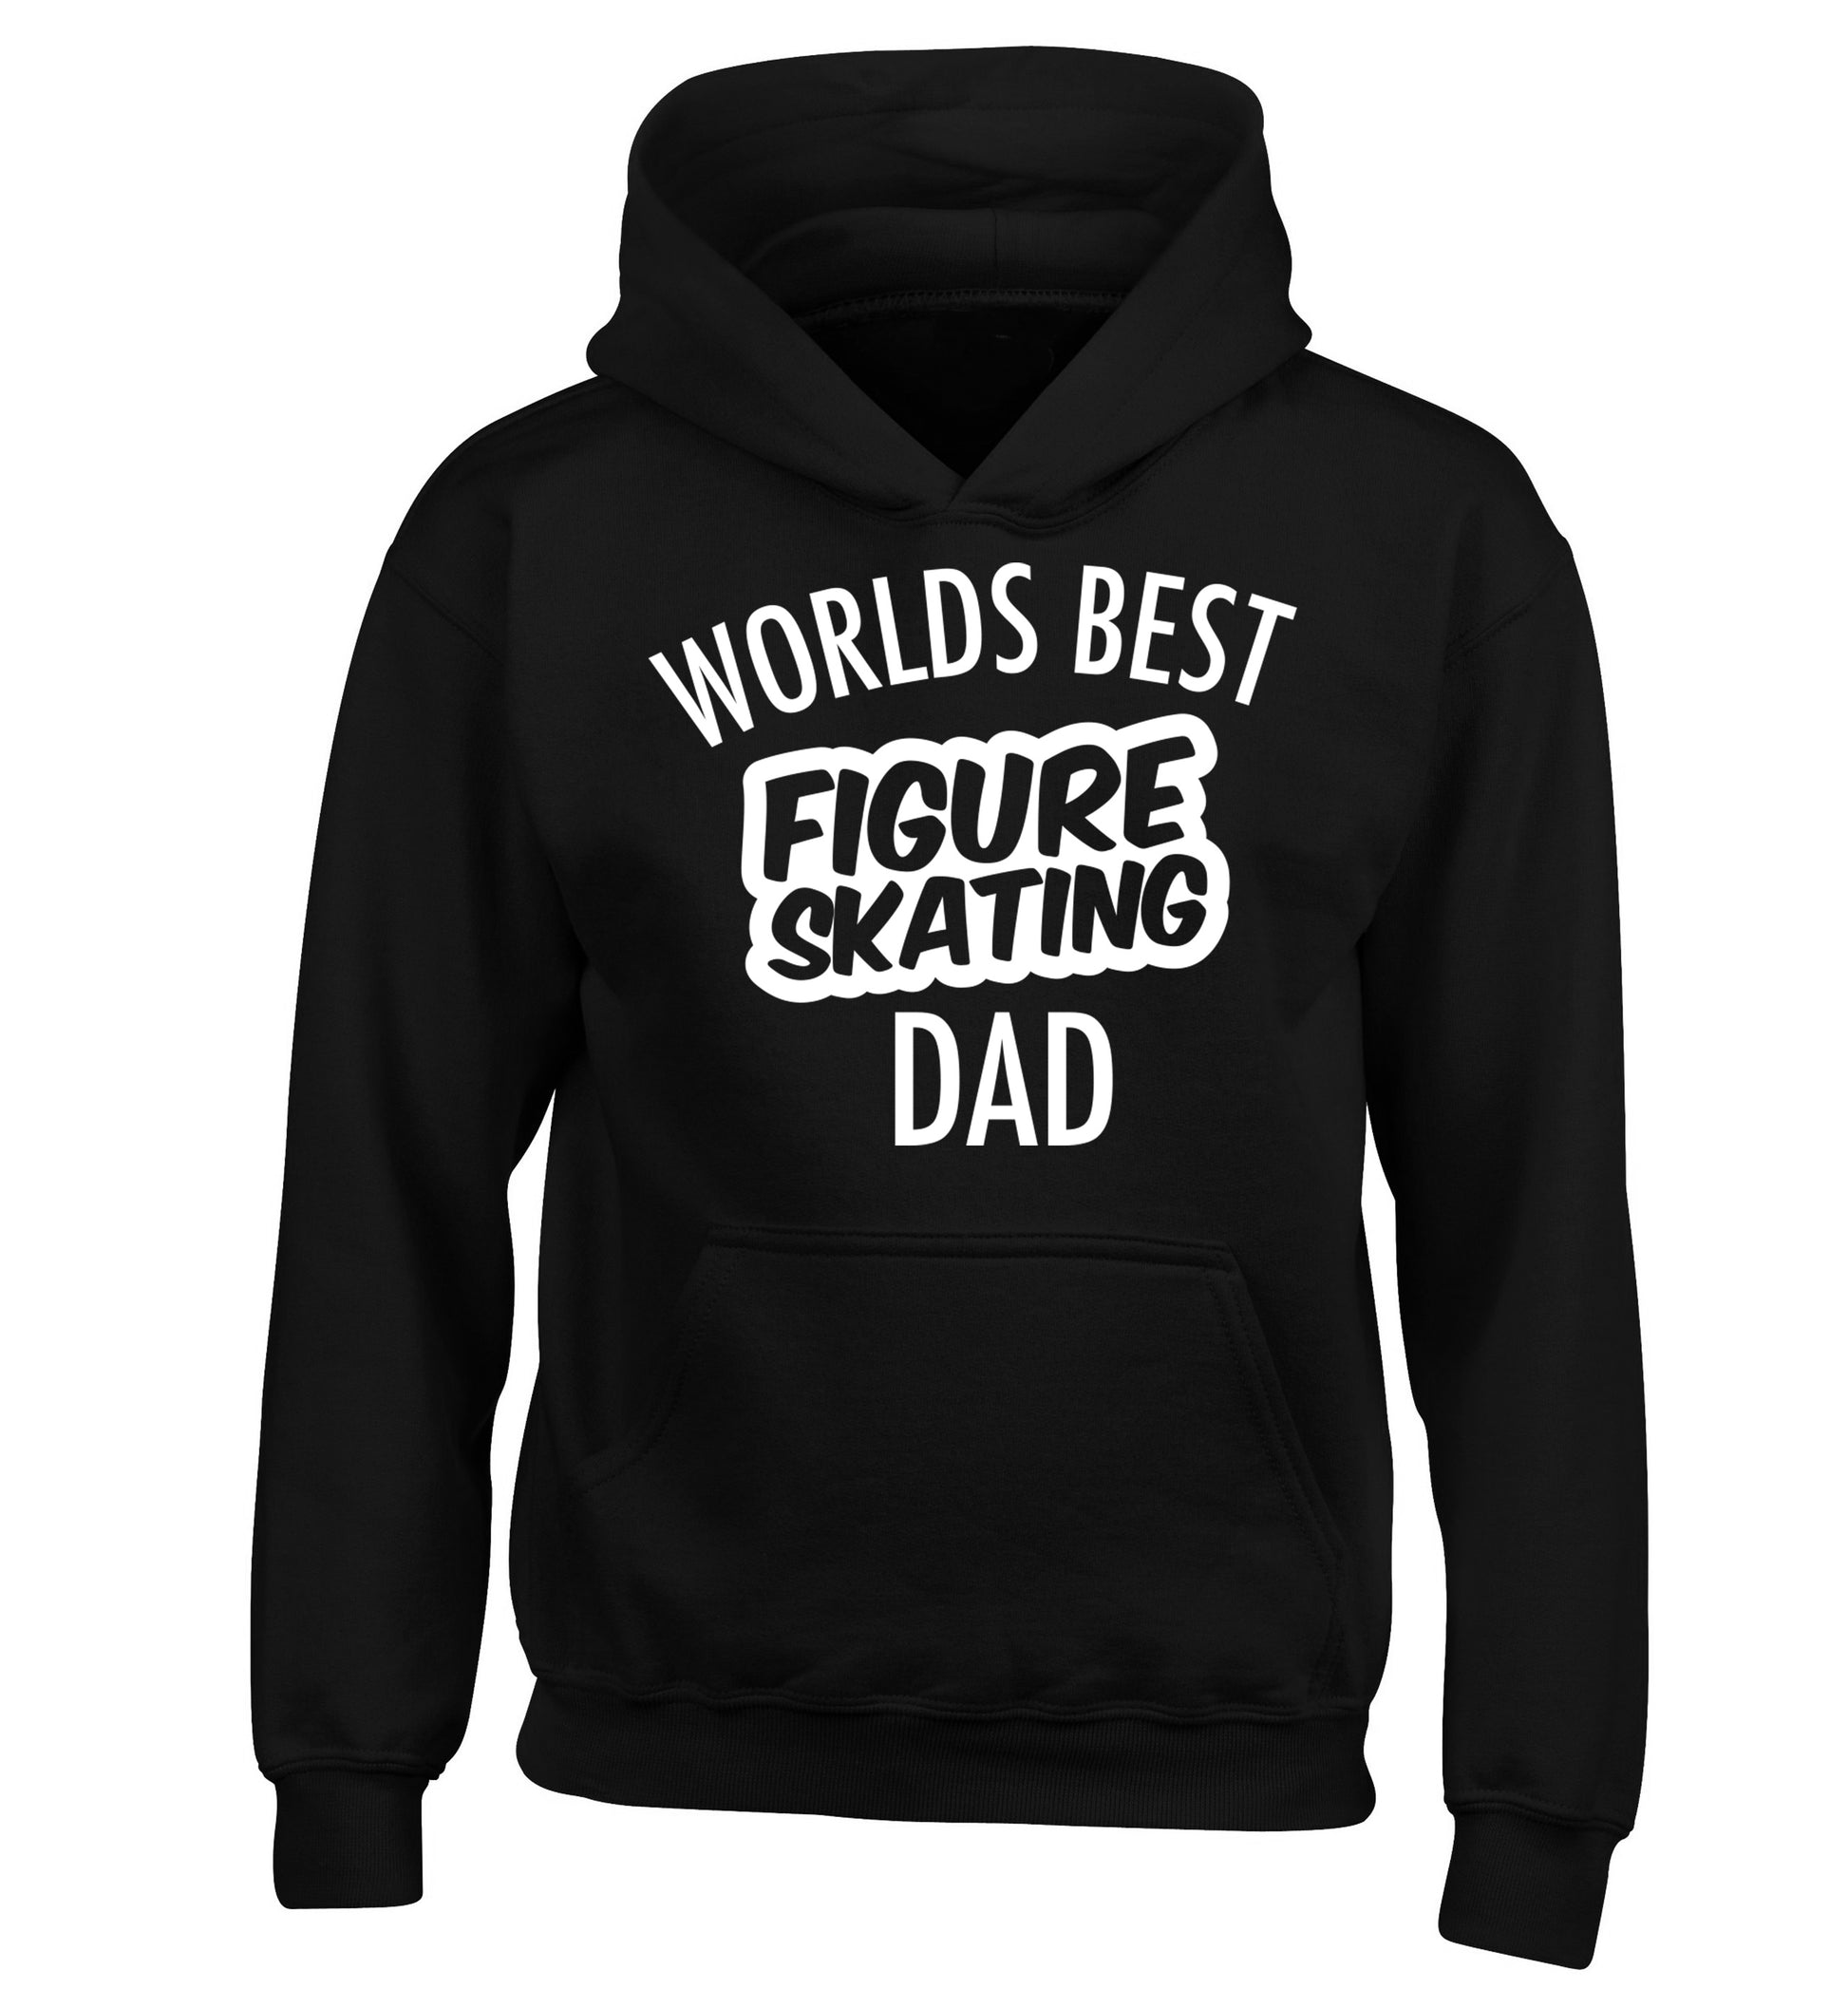 Worlds best figure skating dad children's black hoodie 12-14 Years